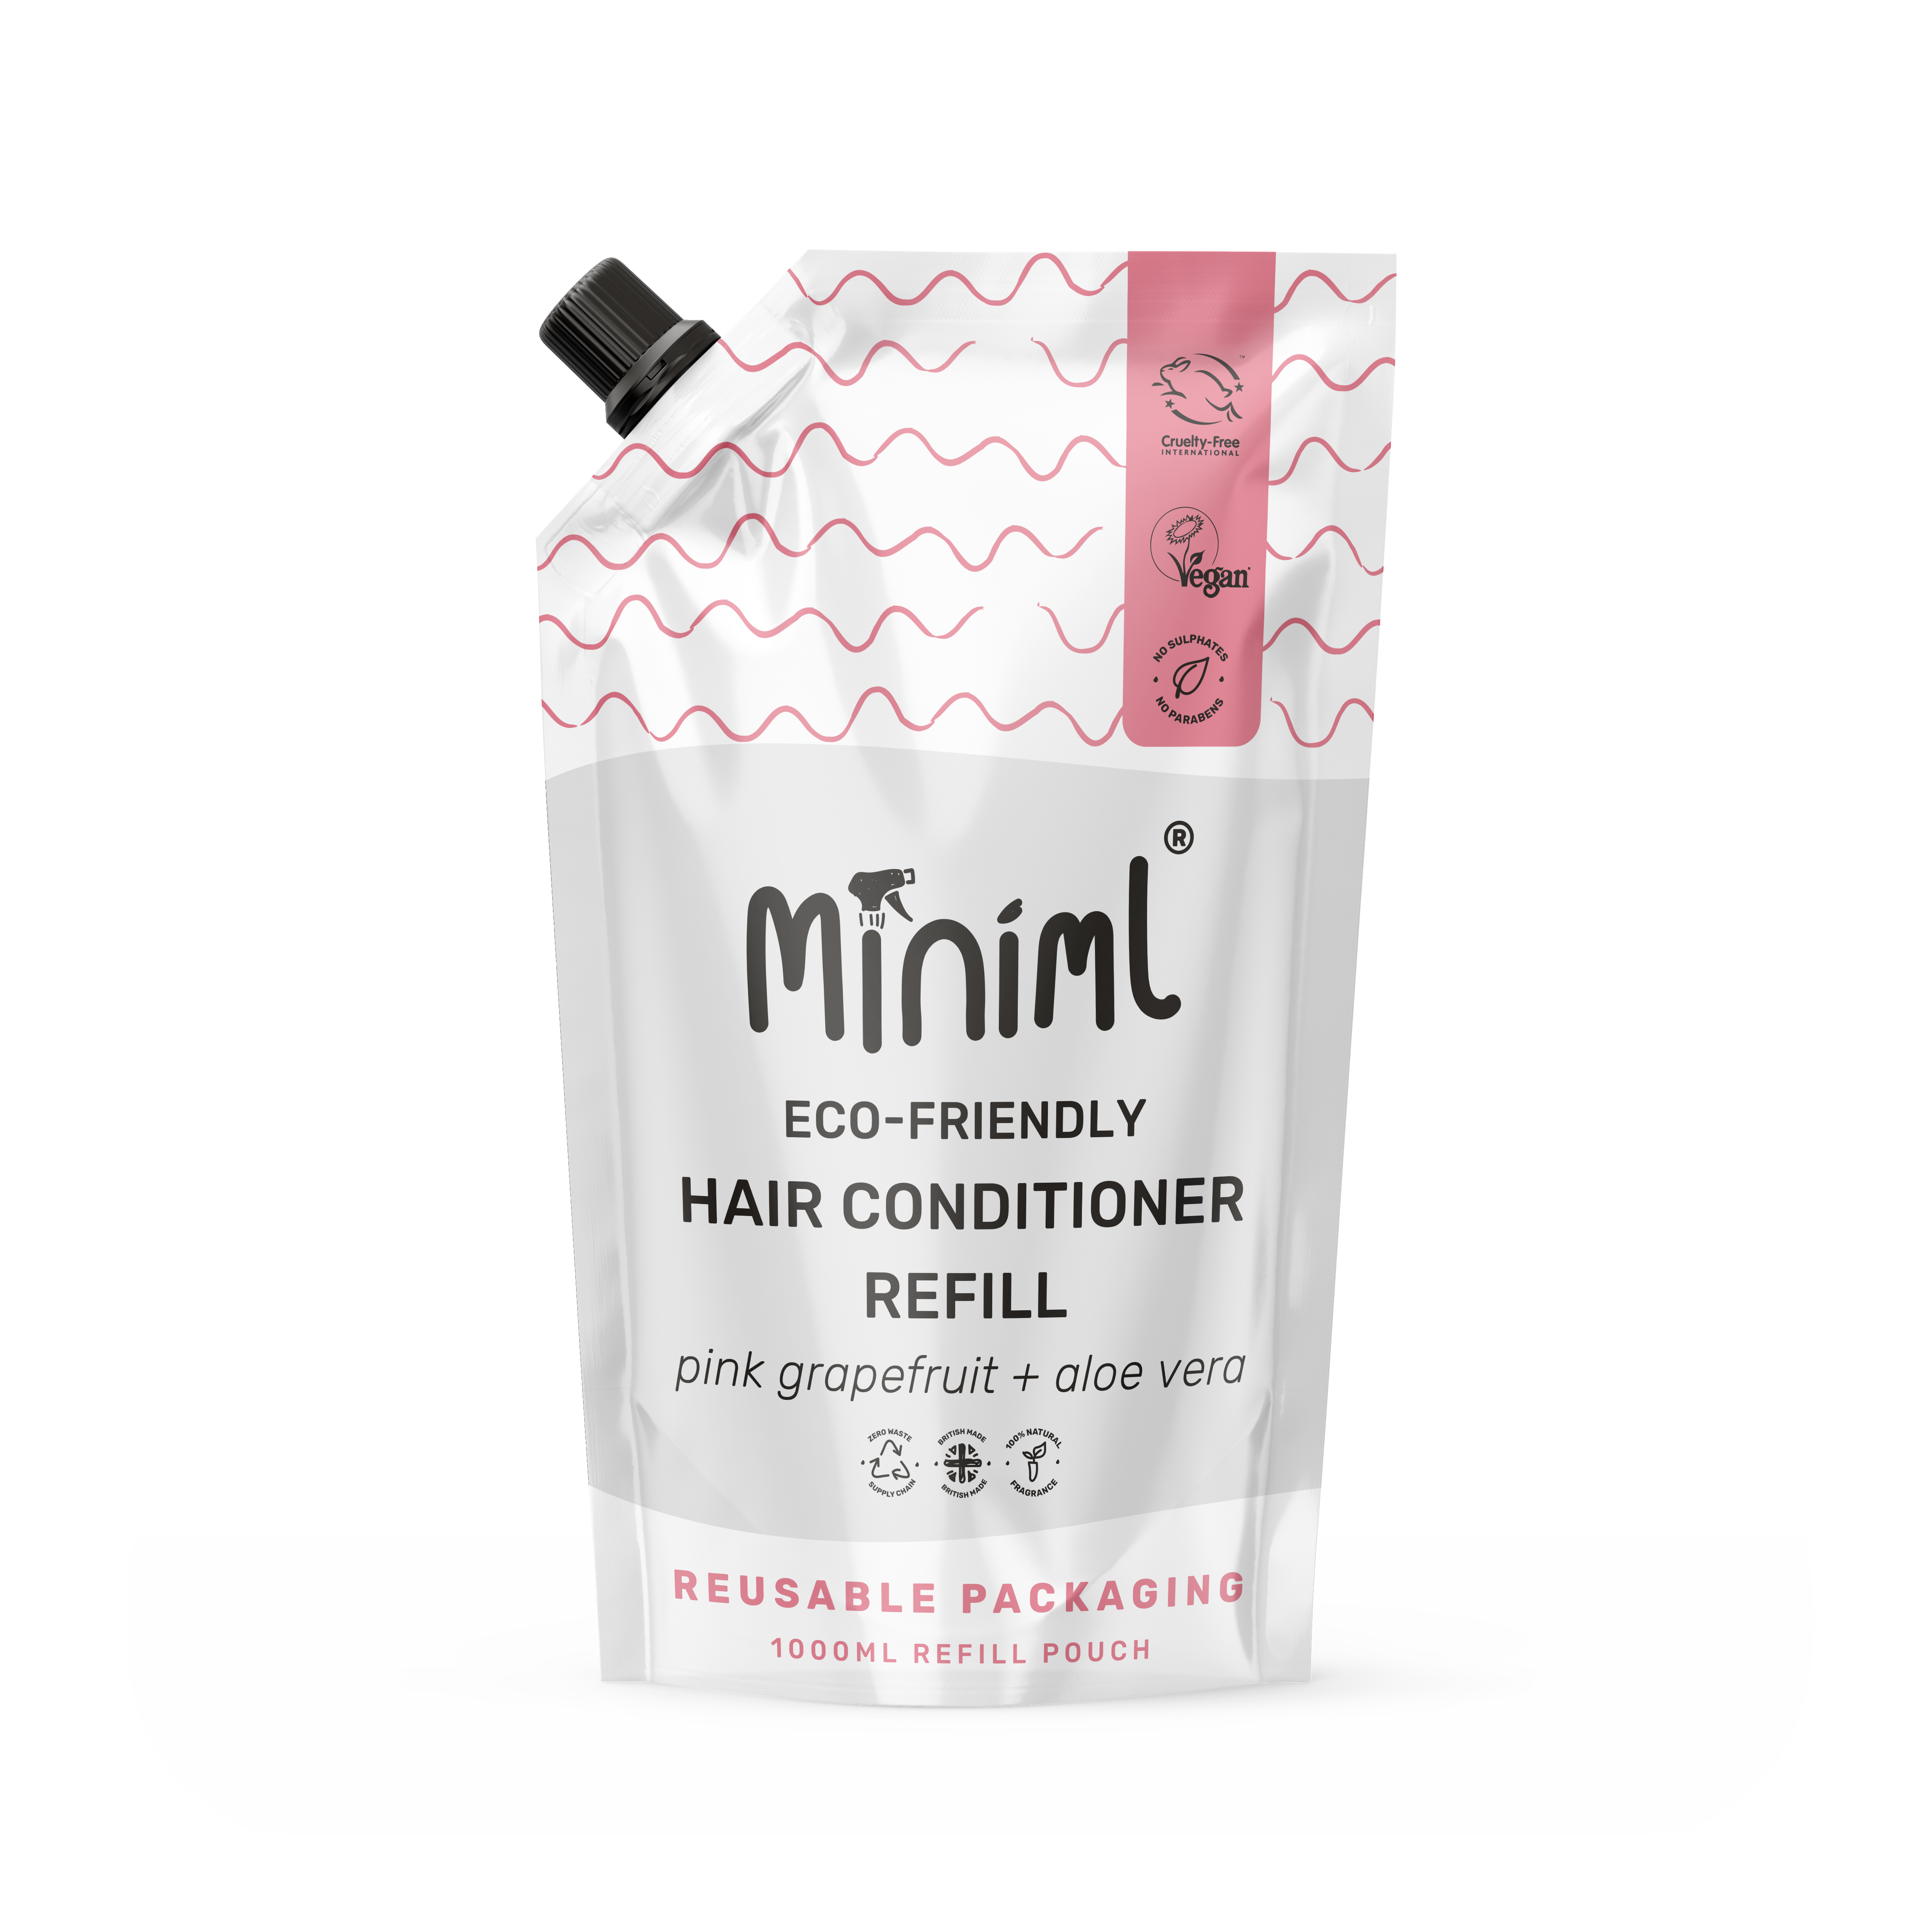 Hair Conditioner - Pink Grapefruit + Aloe Vera - 1L Refill